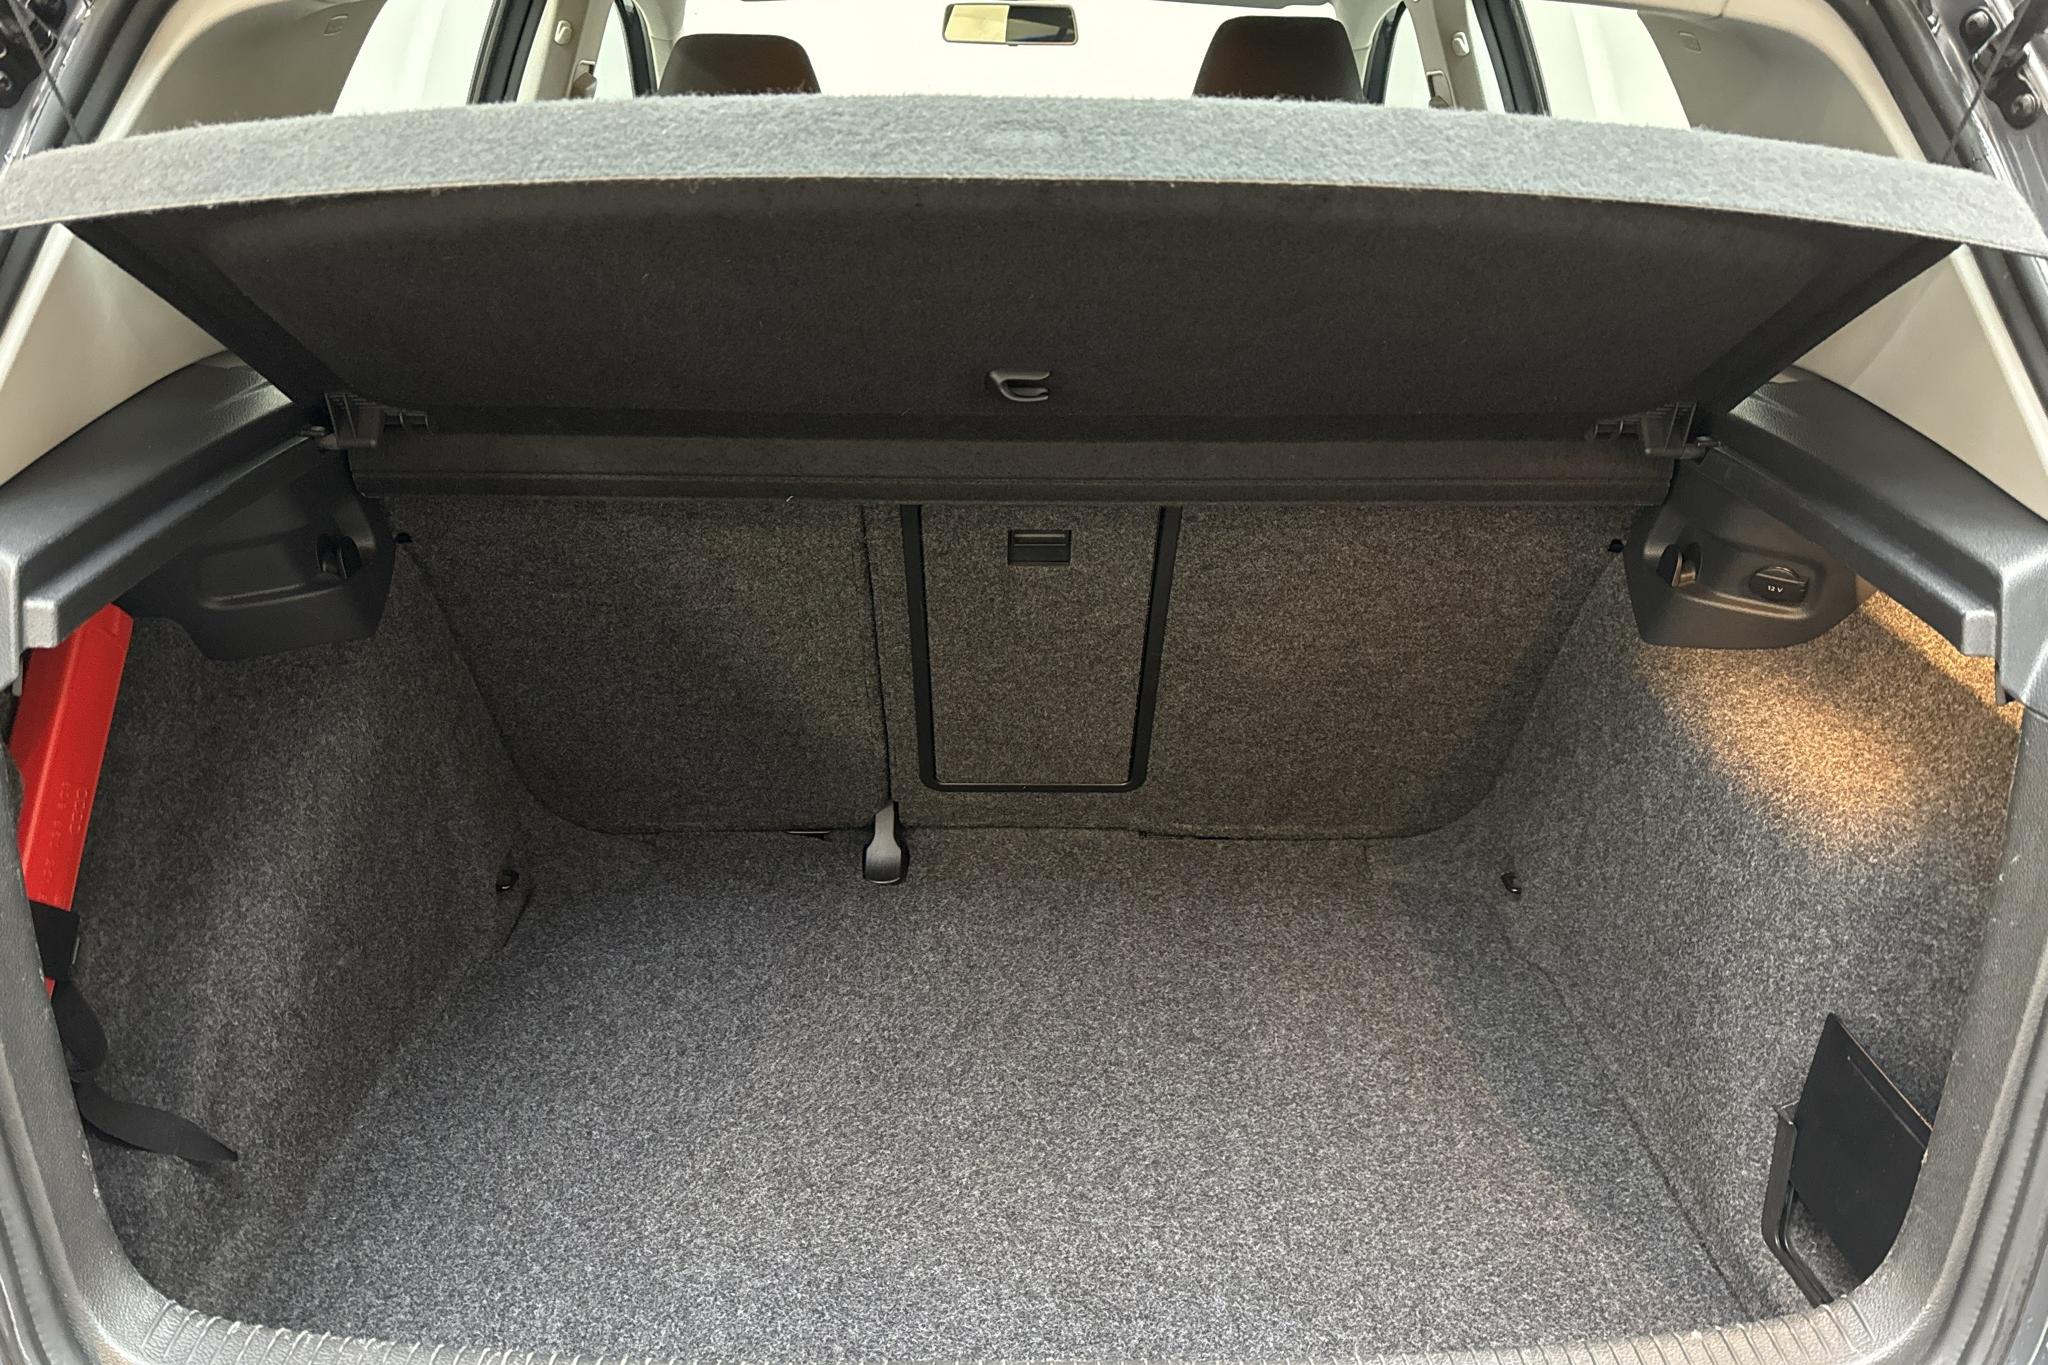 VW Golf VI 1.6 TDI BlueMotion Technology 5dr (105hk) - 157 850 km - Manual - gray - 2012